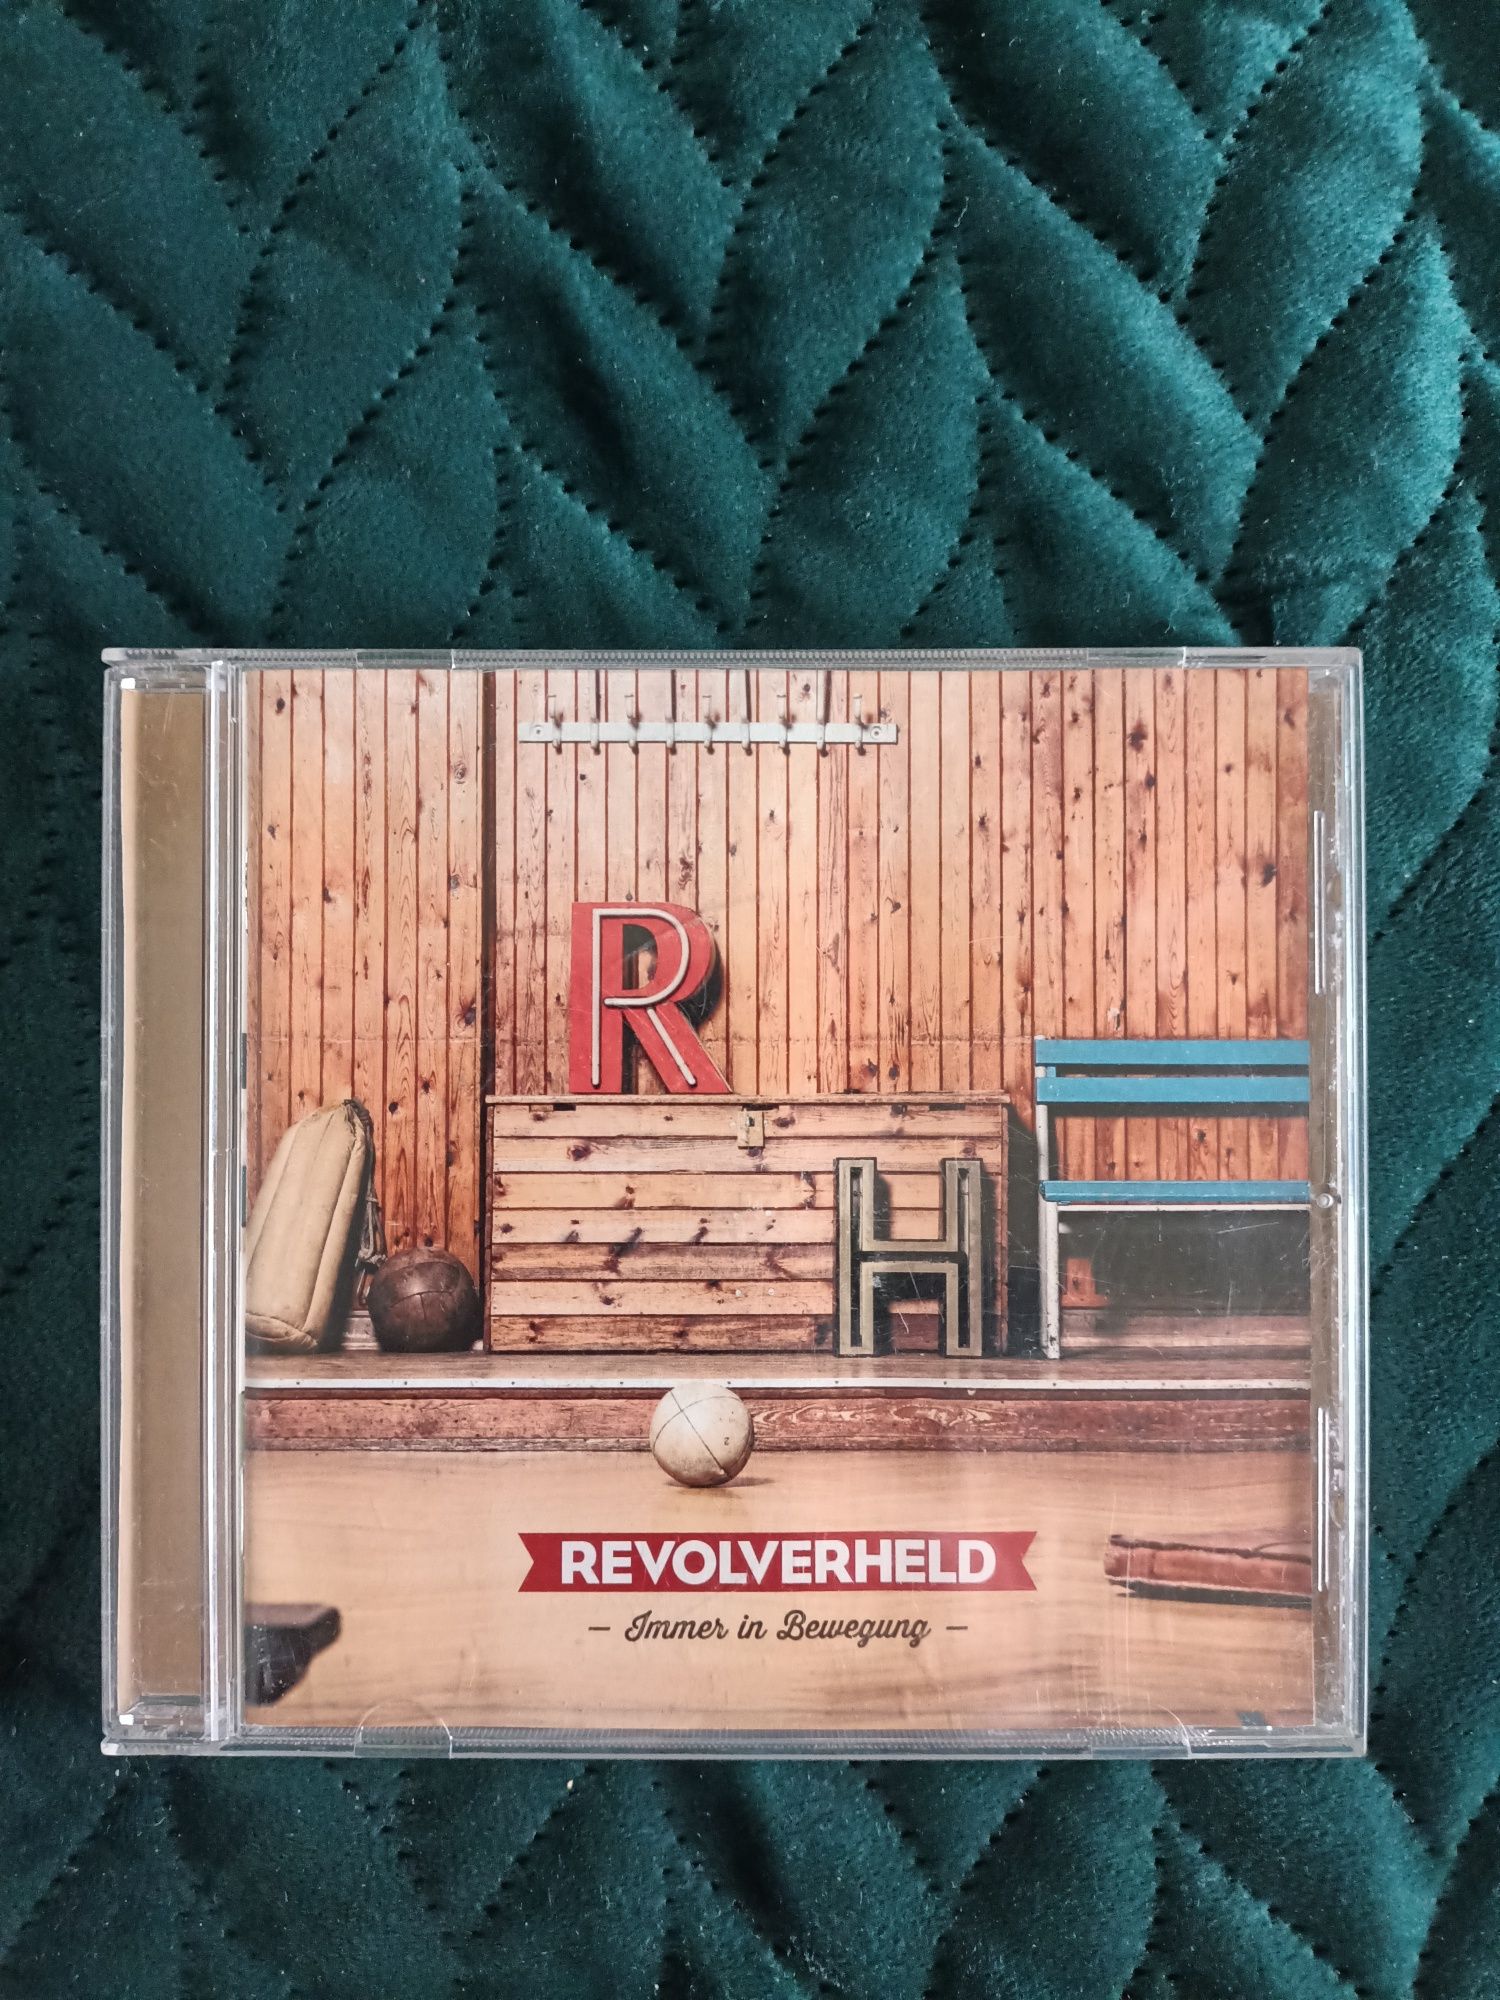 Płyta CD zespołu Revolverheld Summer in bewegung 2013